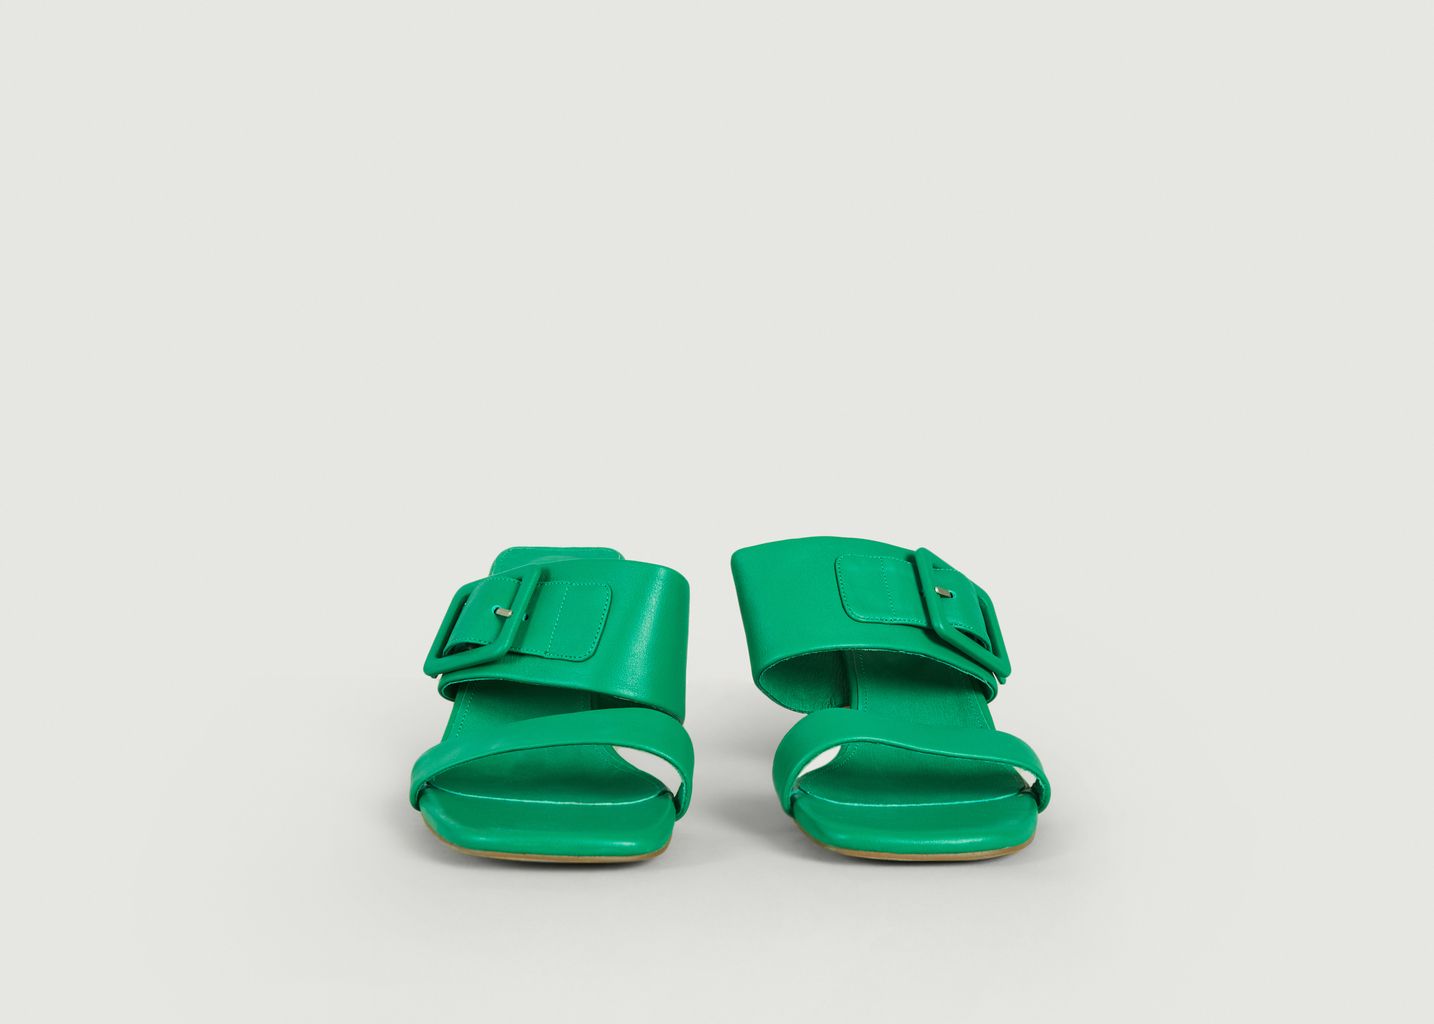 Hewen sandals - Suncoo